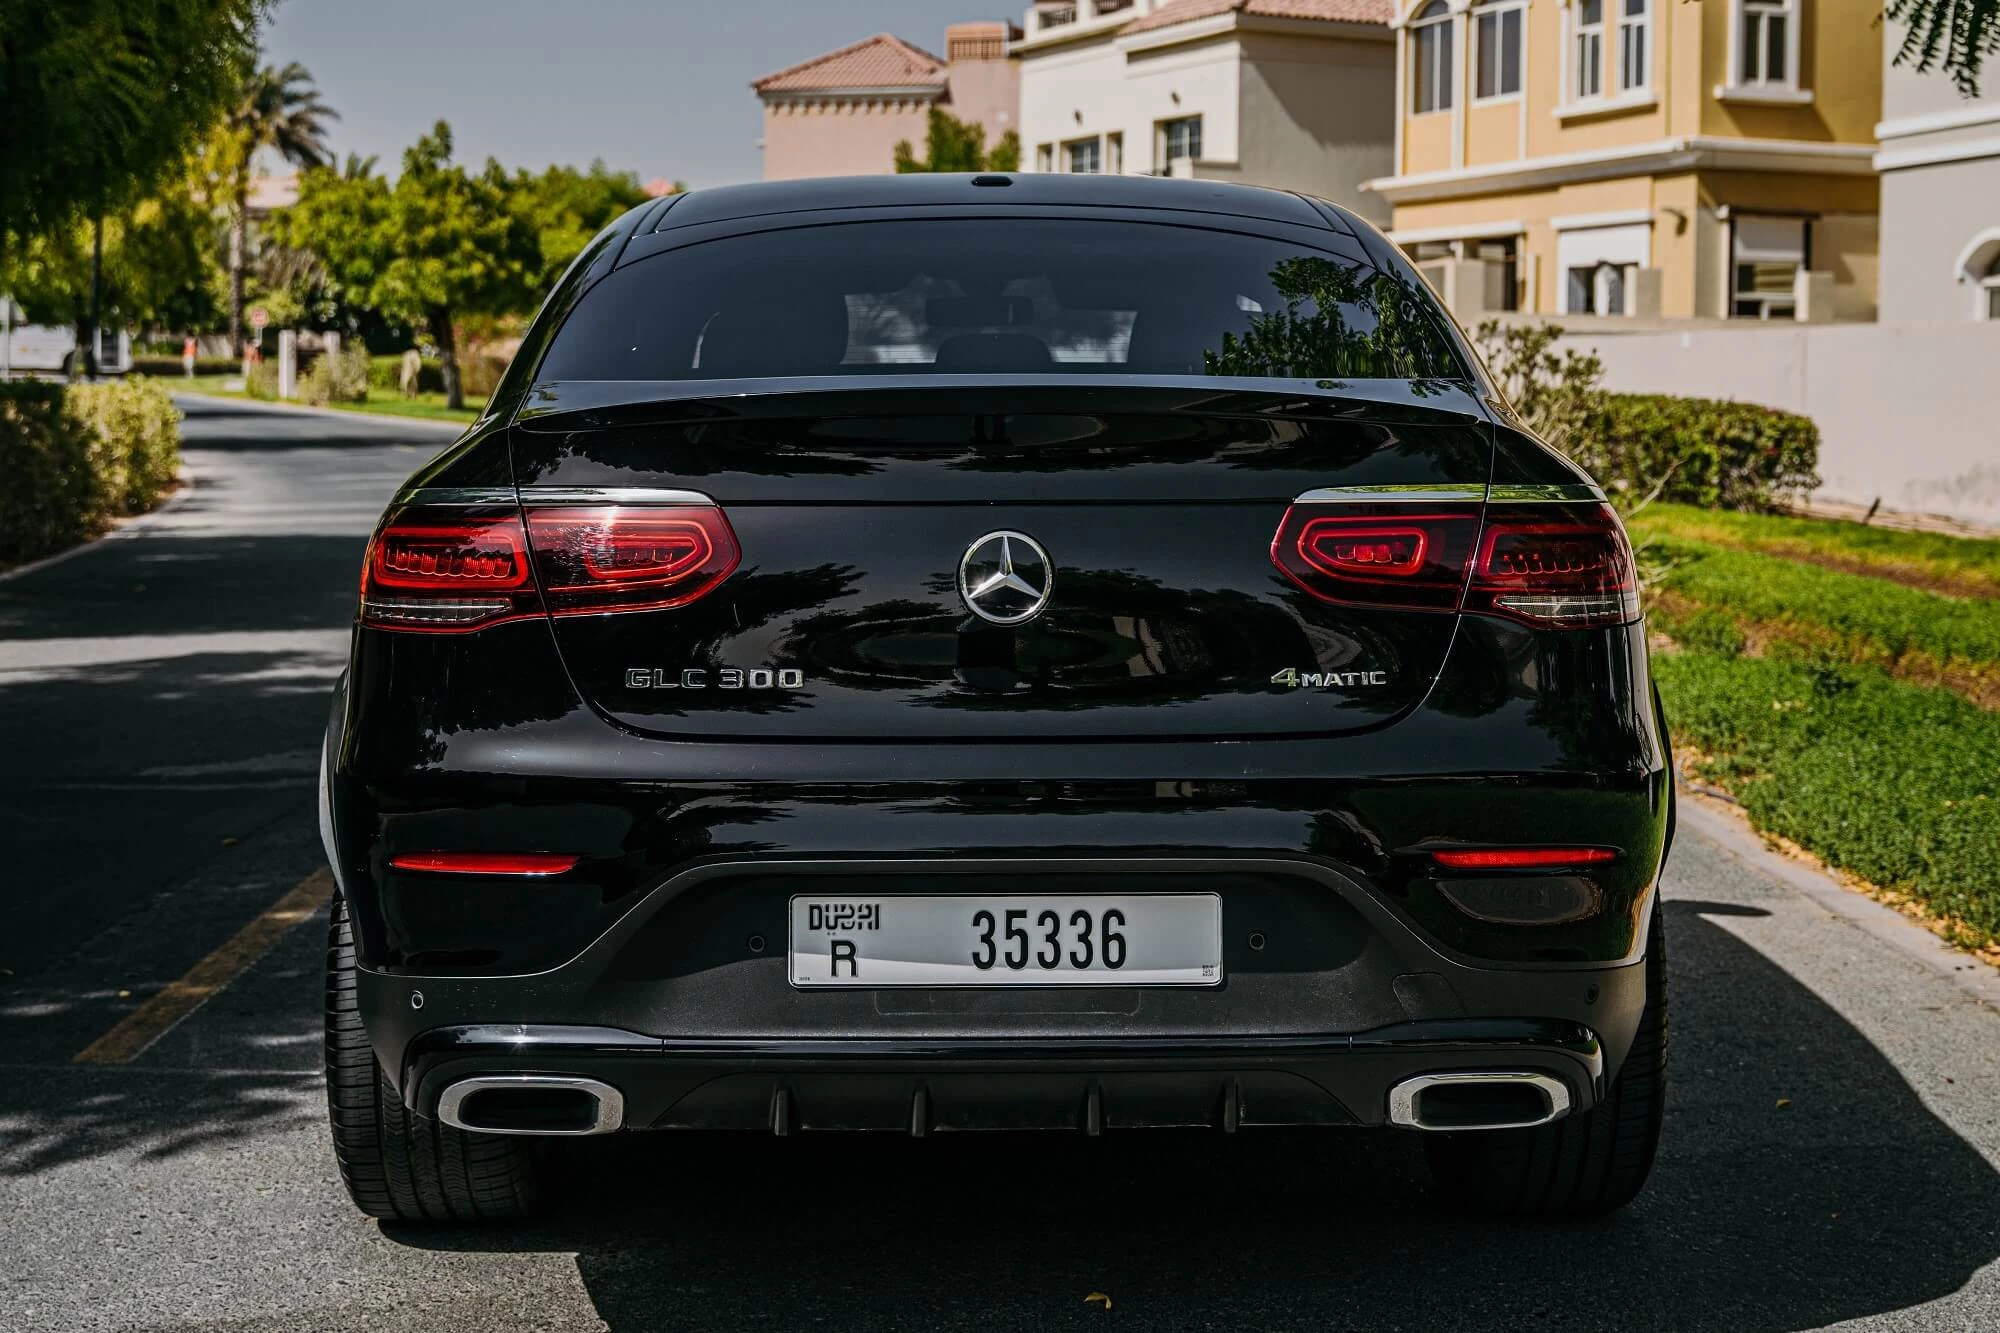 Mercedes Benz GLC Coupé Negro